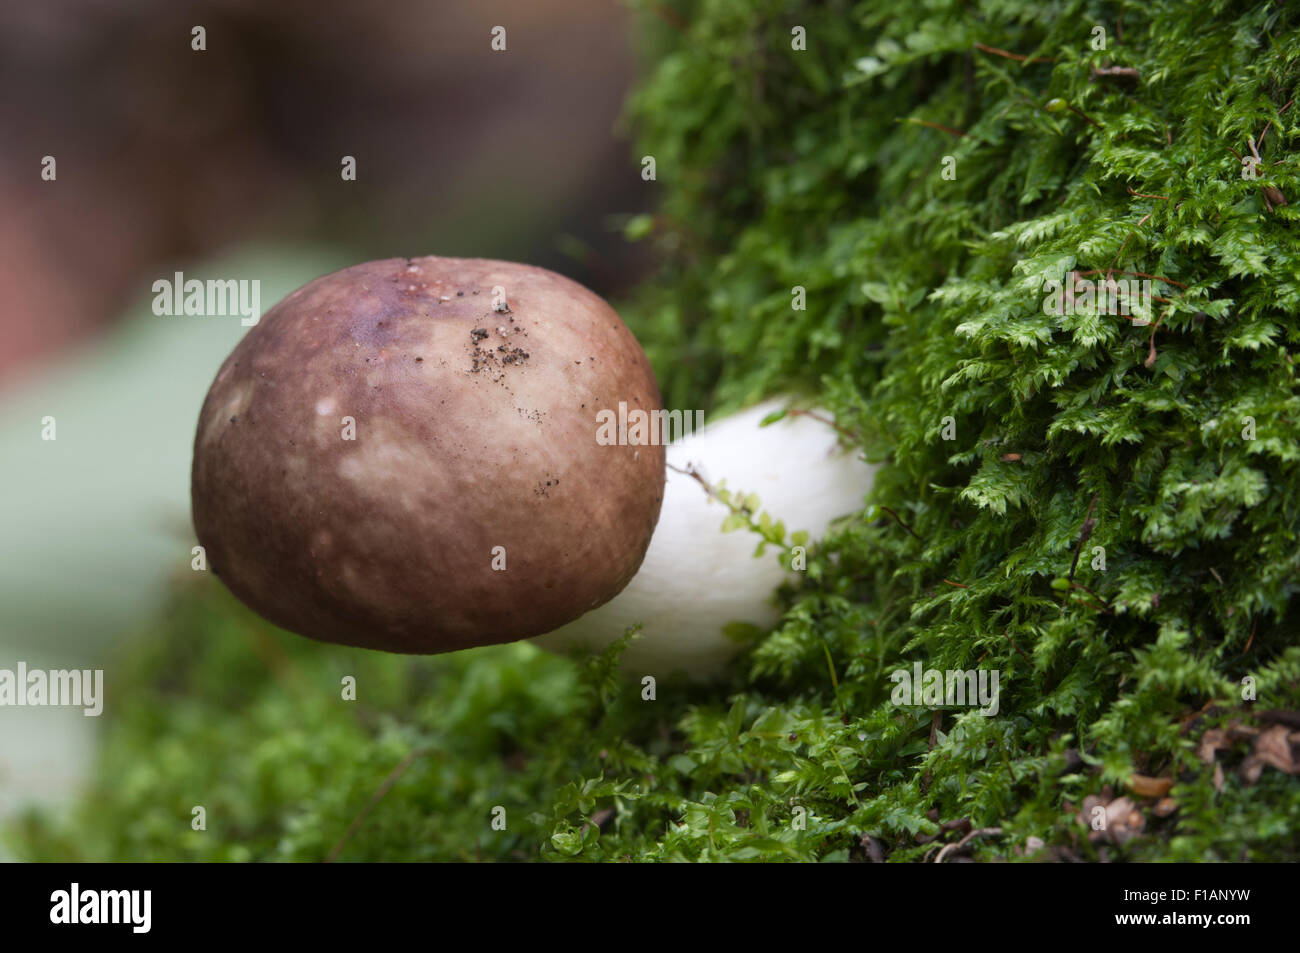 Russula mushroom on an old stump Stock Photo